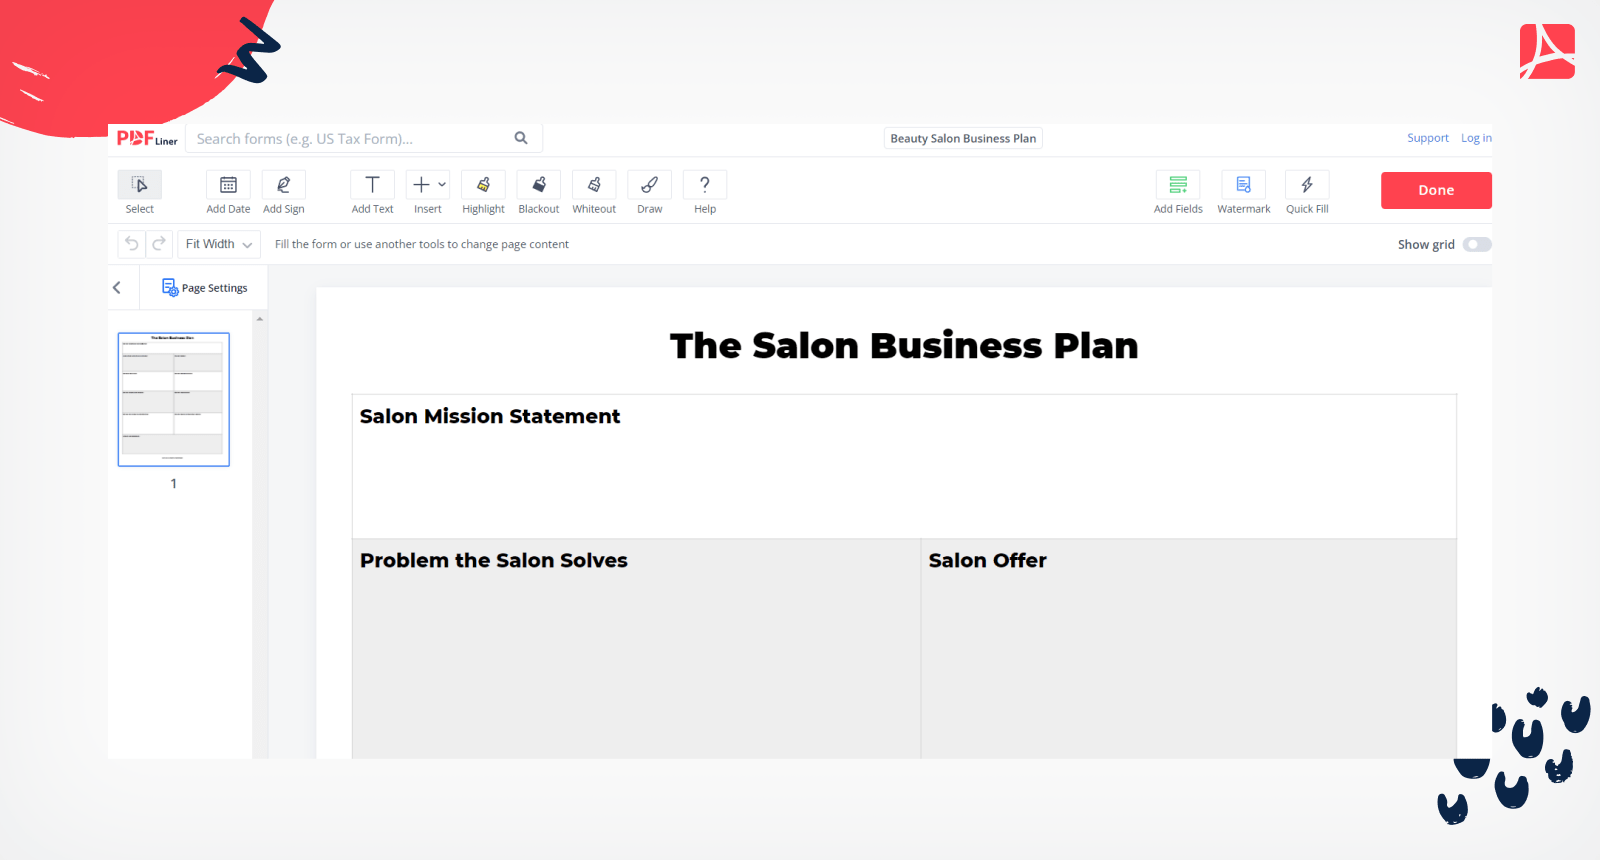 Beauty Salon Business Plan on PDFLiner